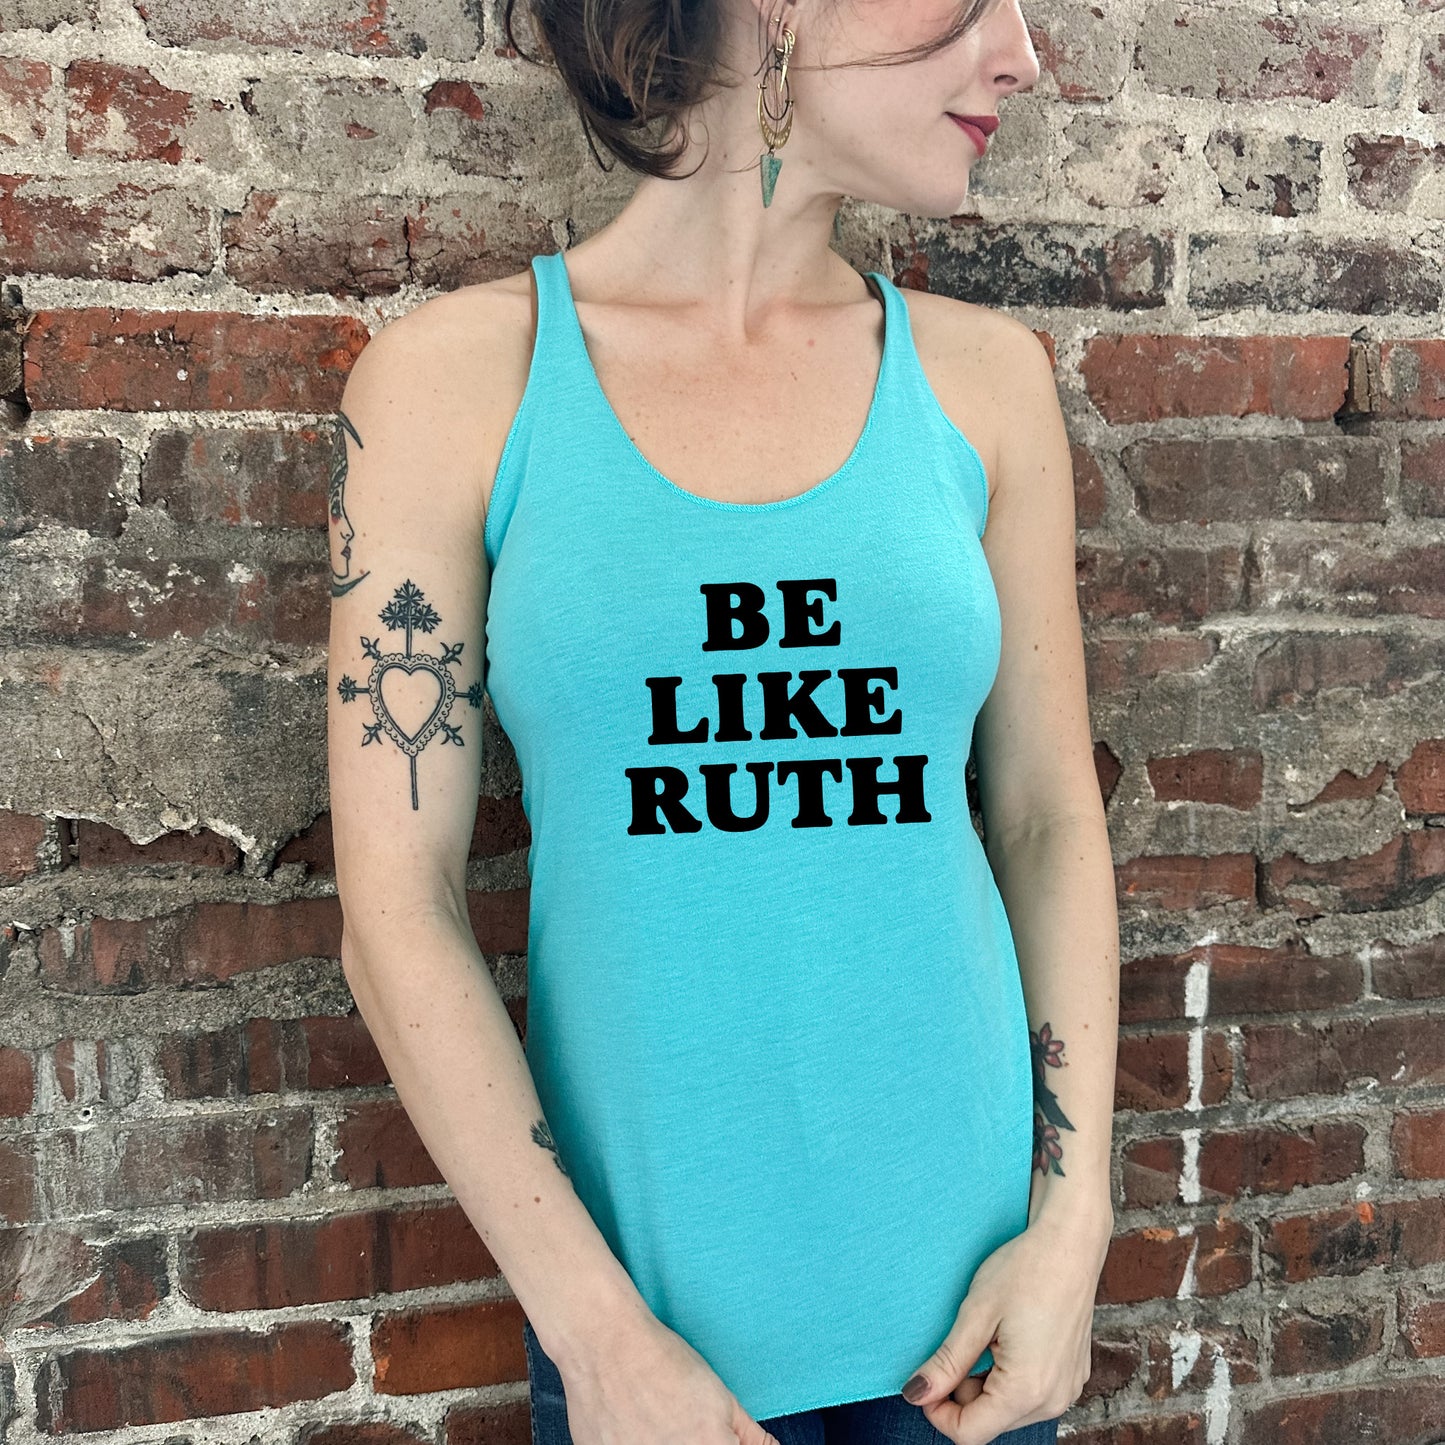 Be Like Ruth (Bader Ginsburg/ RBG) - Women's Tank - Heather Gray, Tahiti, or Envy